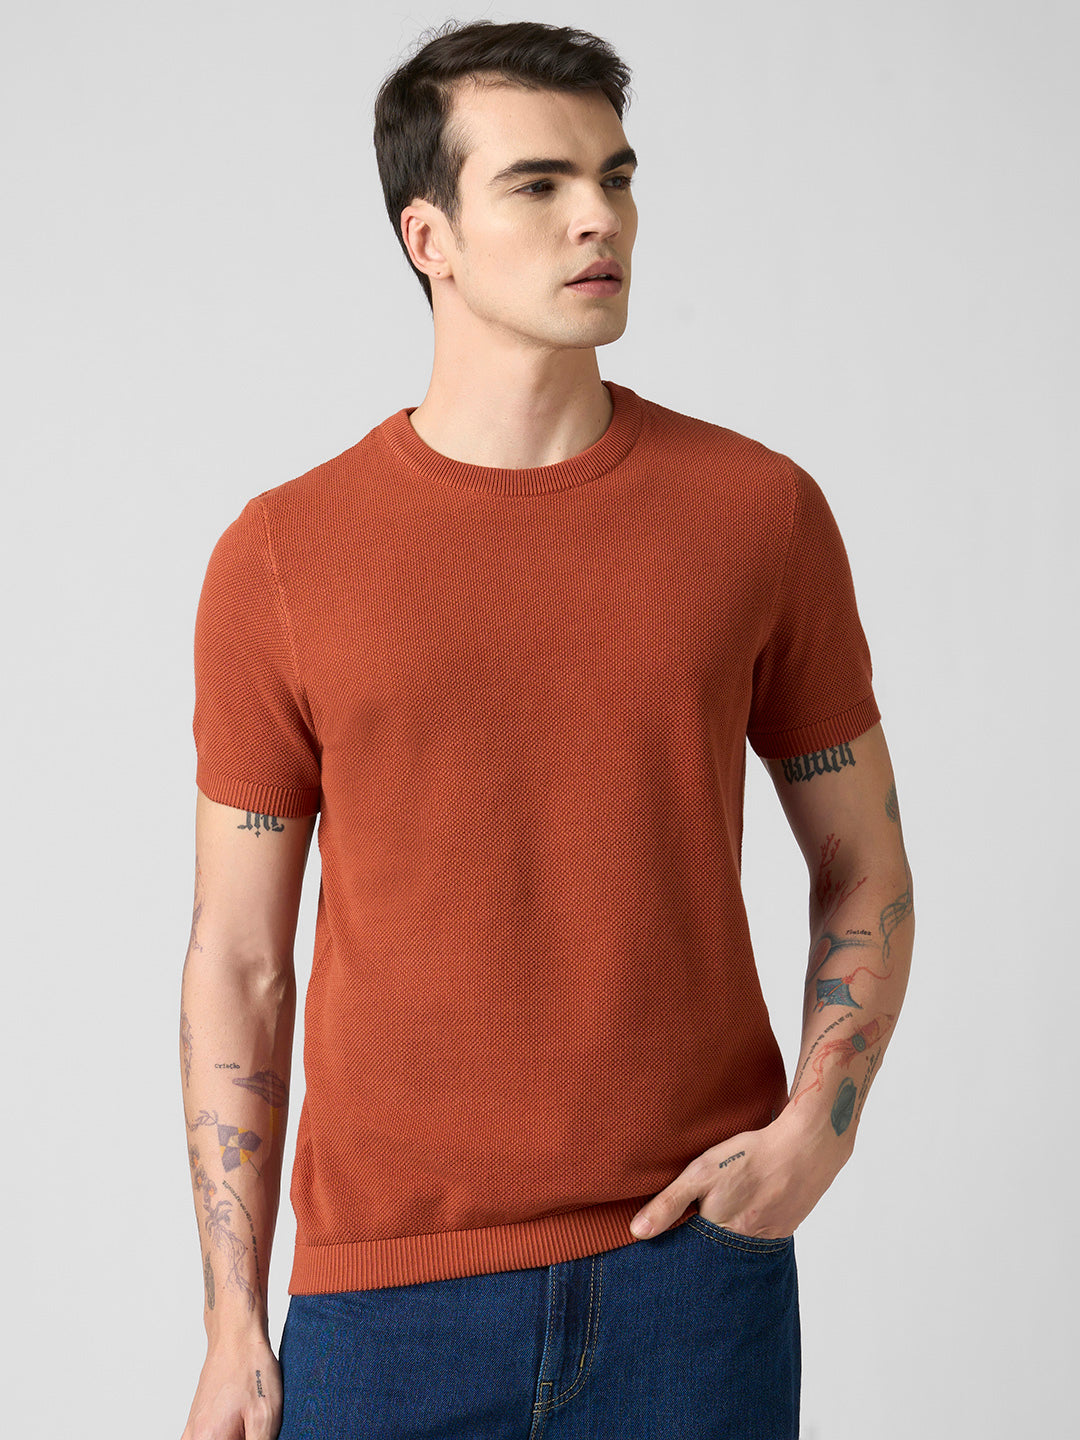 Bombay High Men's Premium Cotton Solid Cinnamon Brown Knit T-Shirt